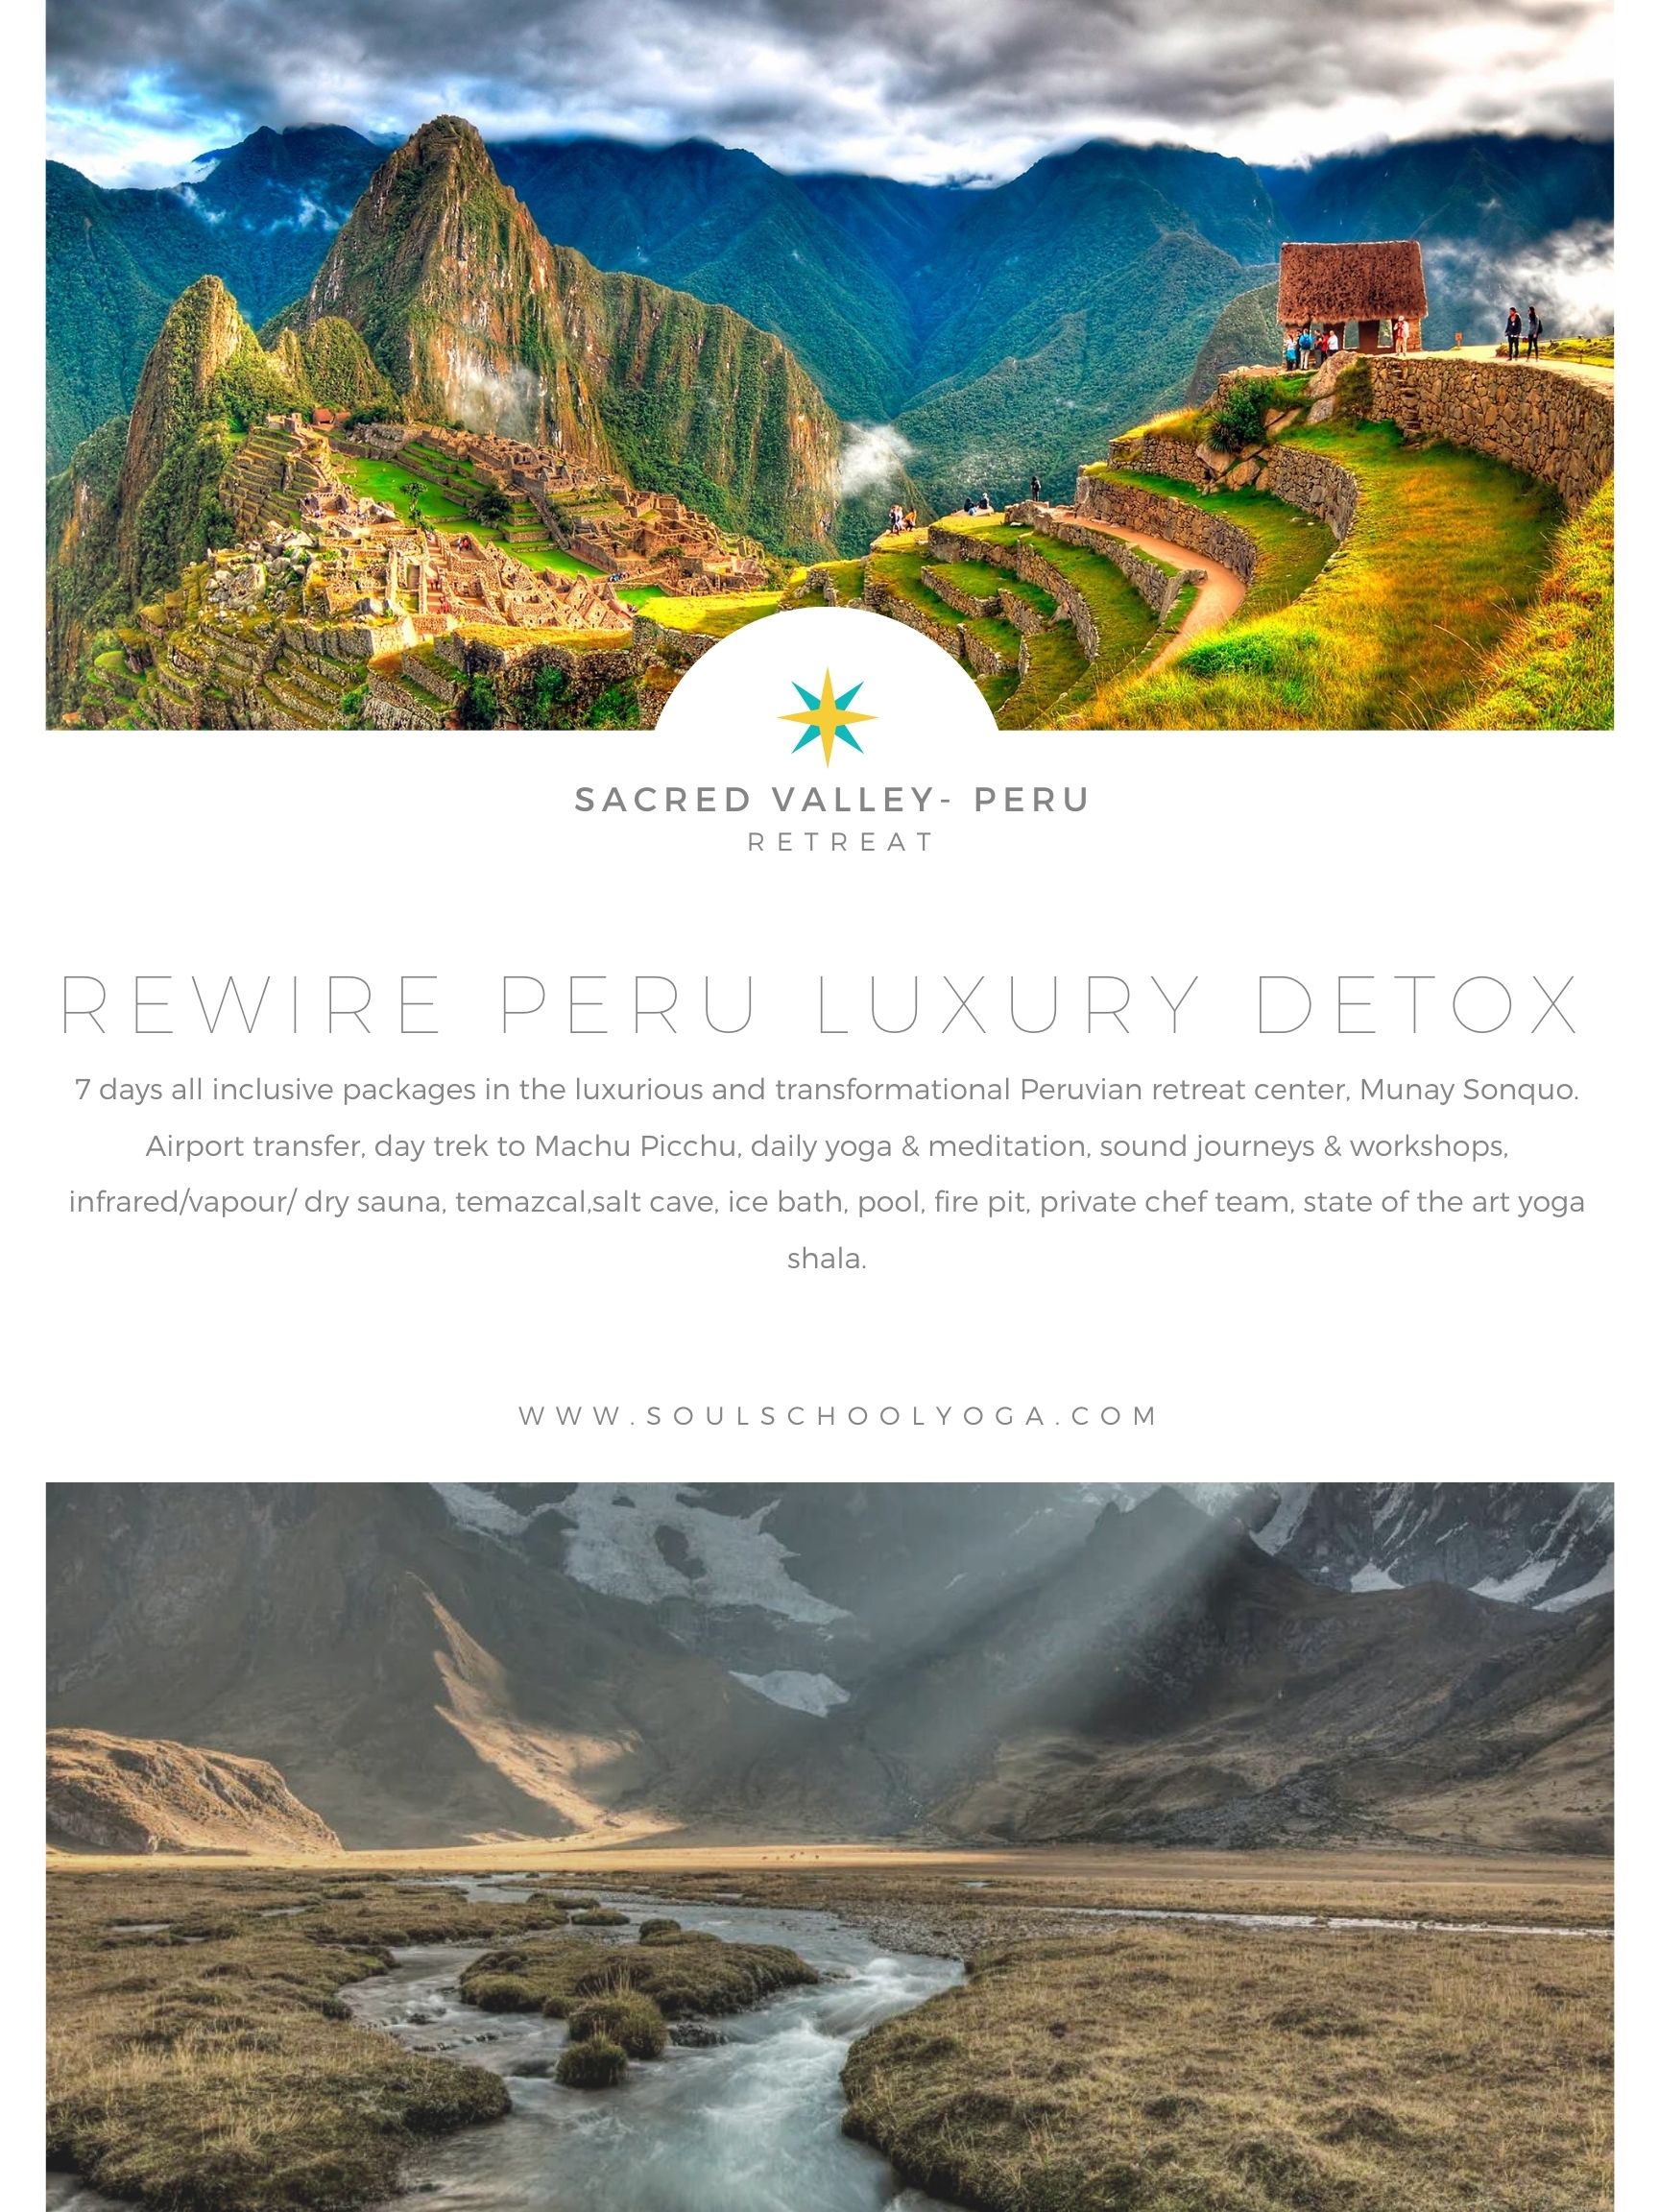 Luxury Bio-hacking & Ayahuasca Retreat Peru